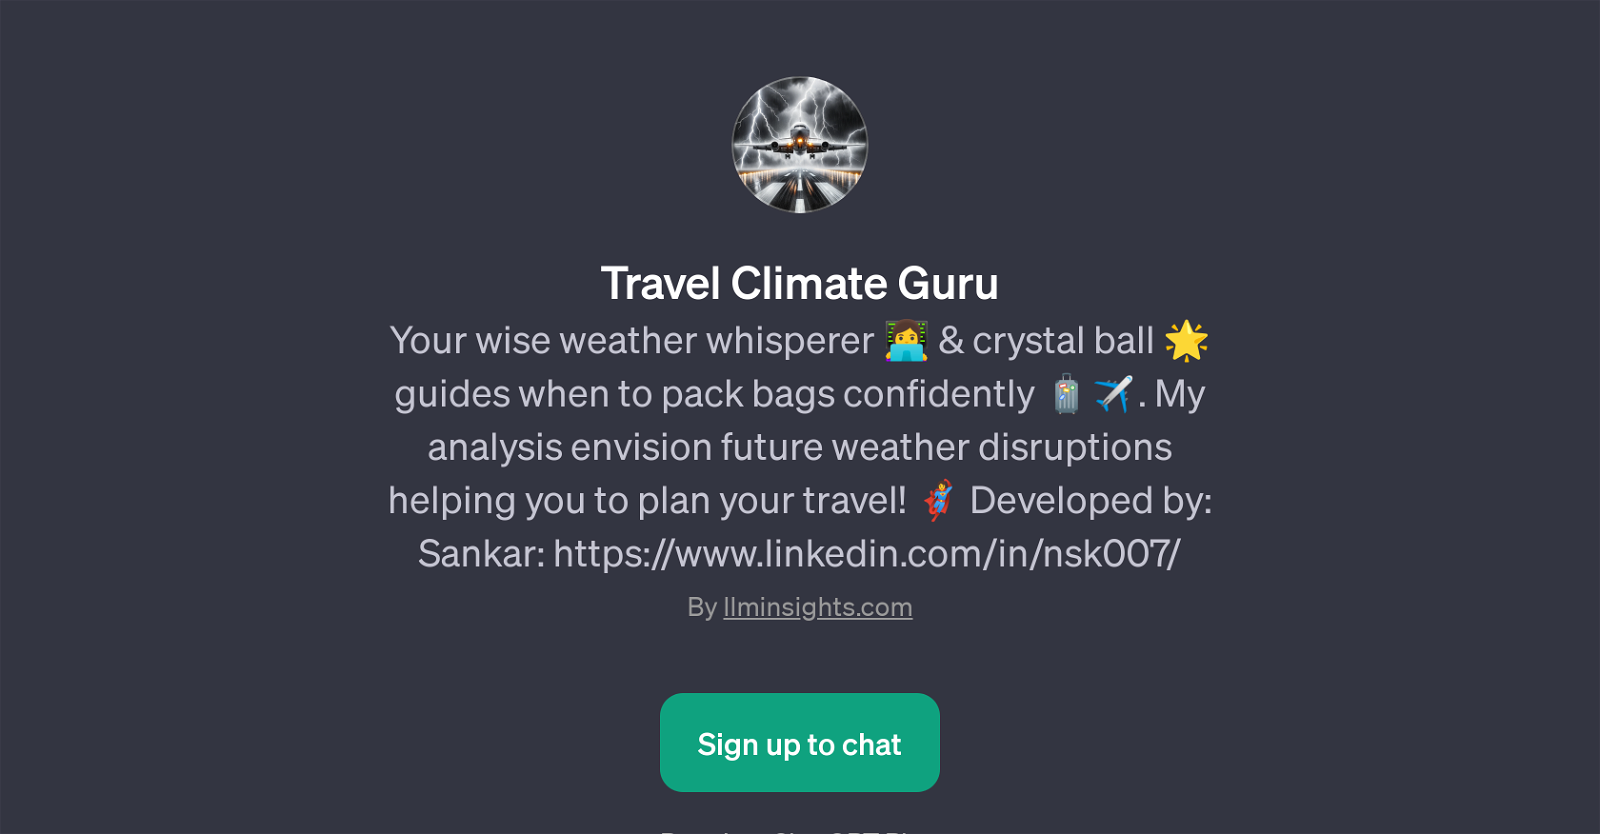 Travel Climate Guru website